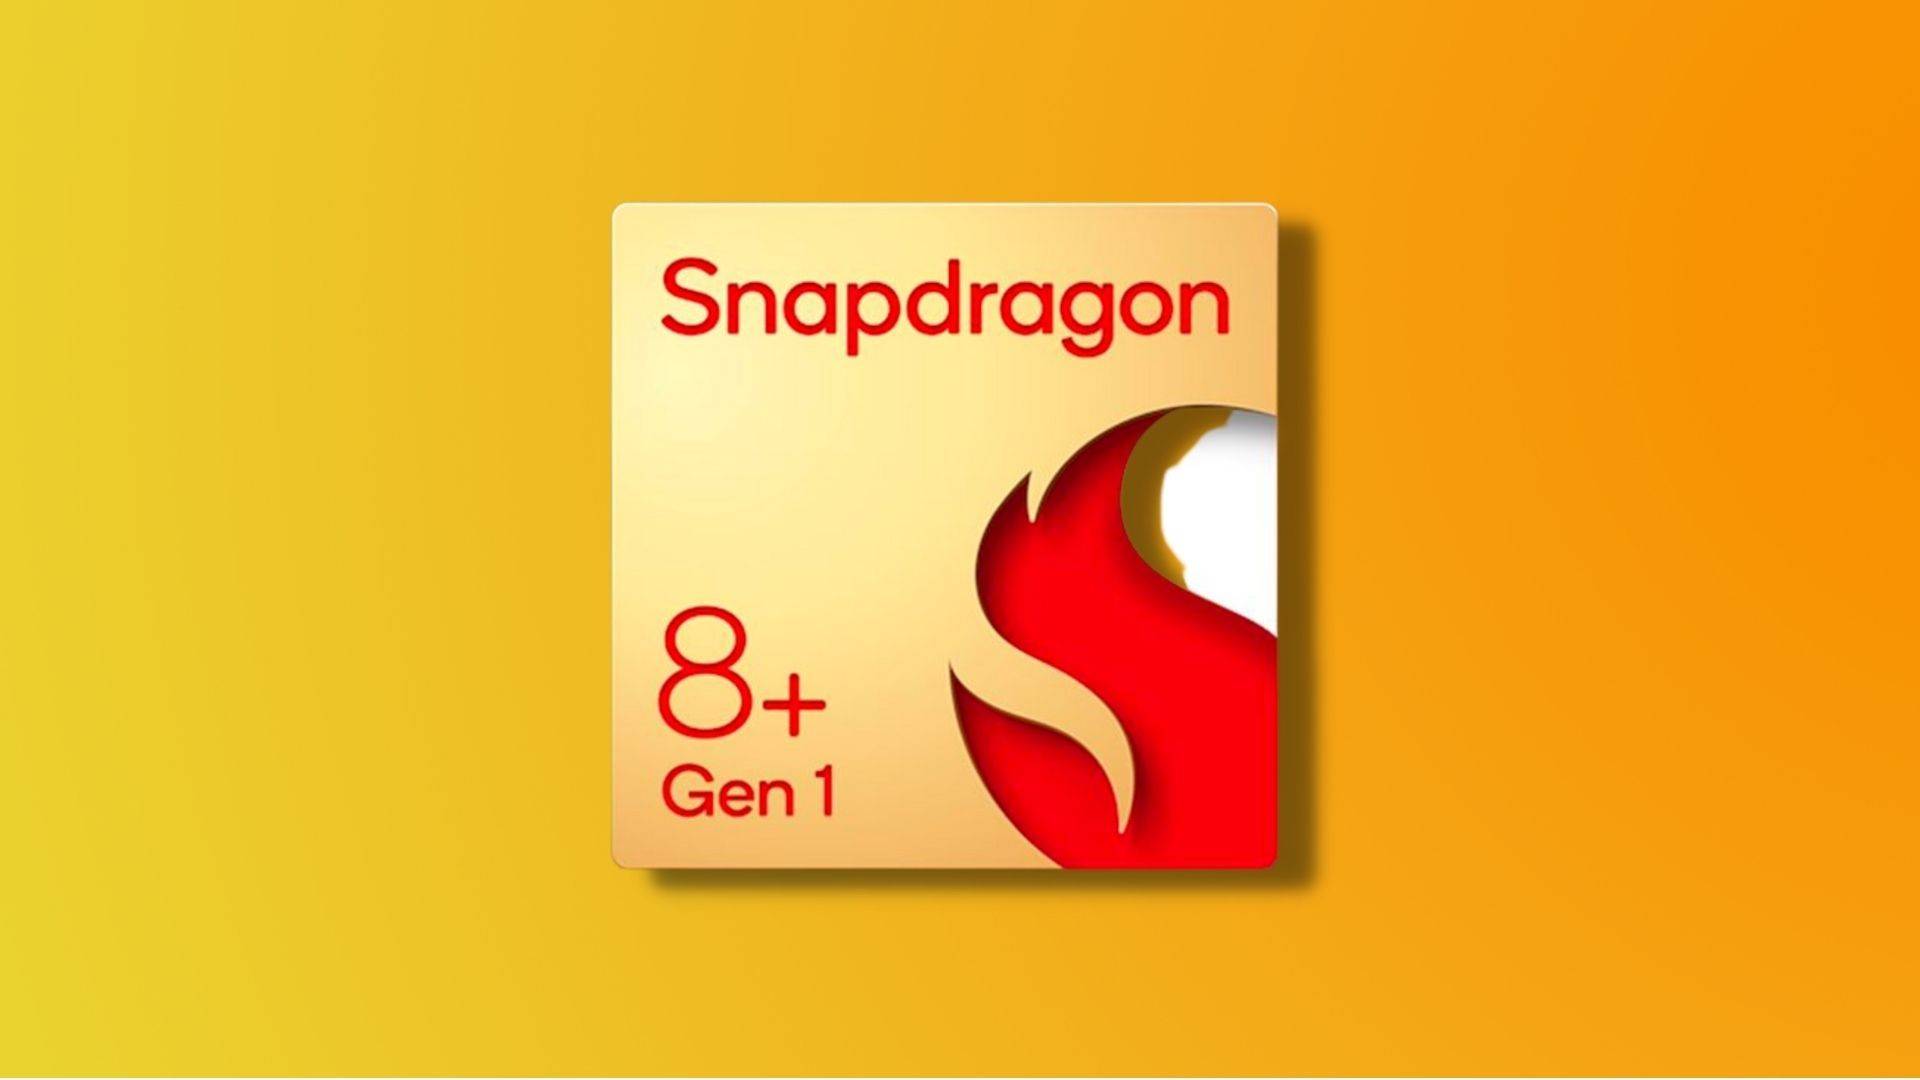 Qualcomm Snapdragon 8 Plus Gen 1 chipset